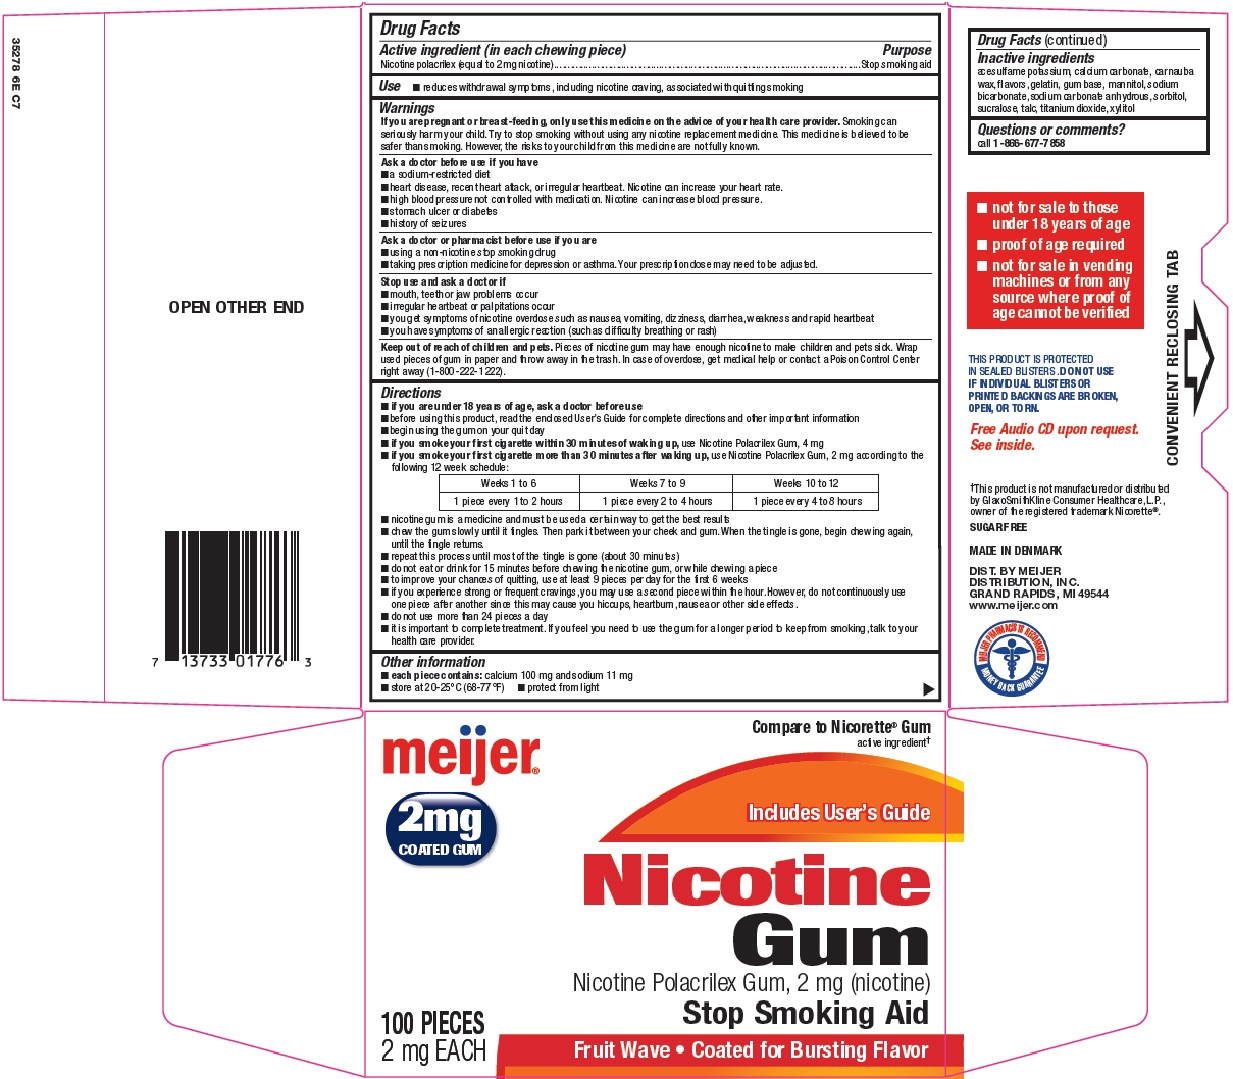 Nicotine Gum image 2